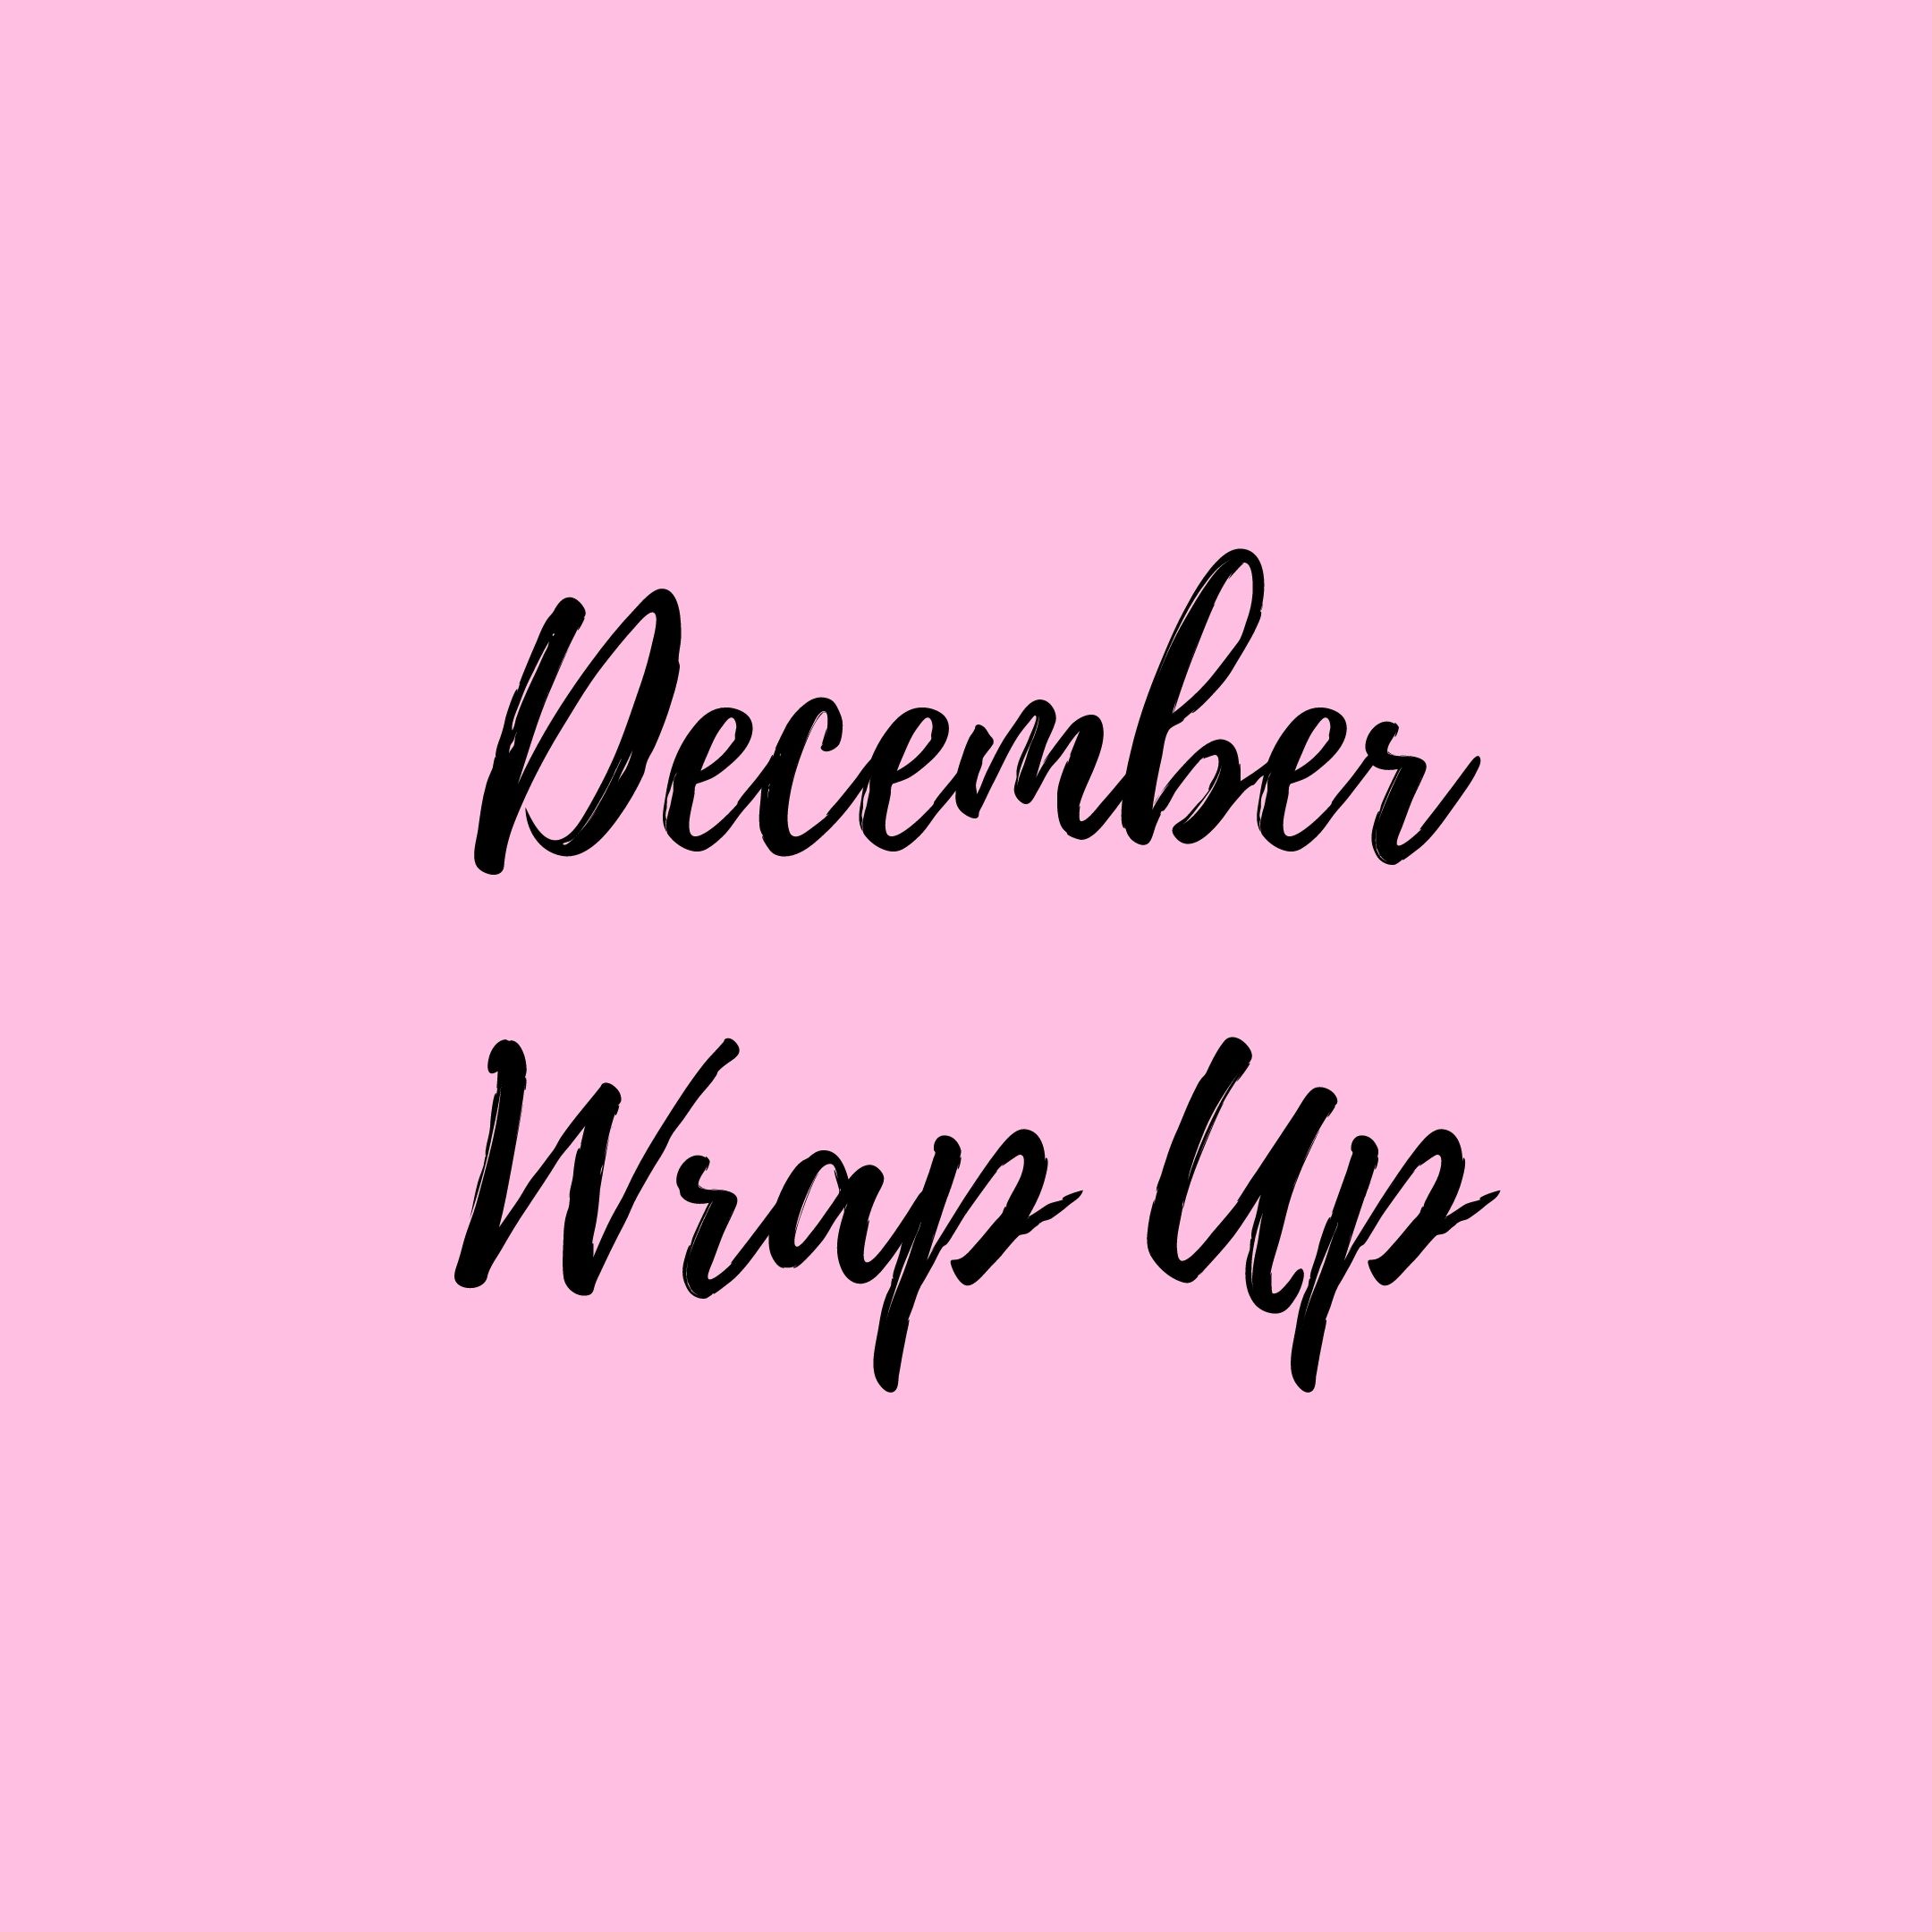 December wrap up